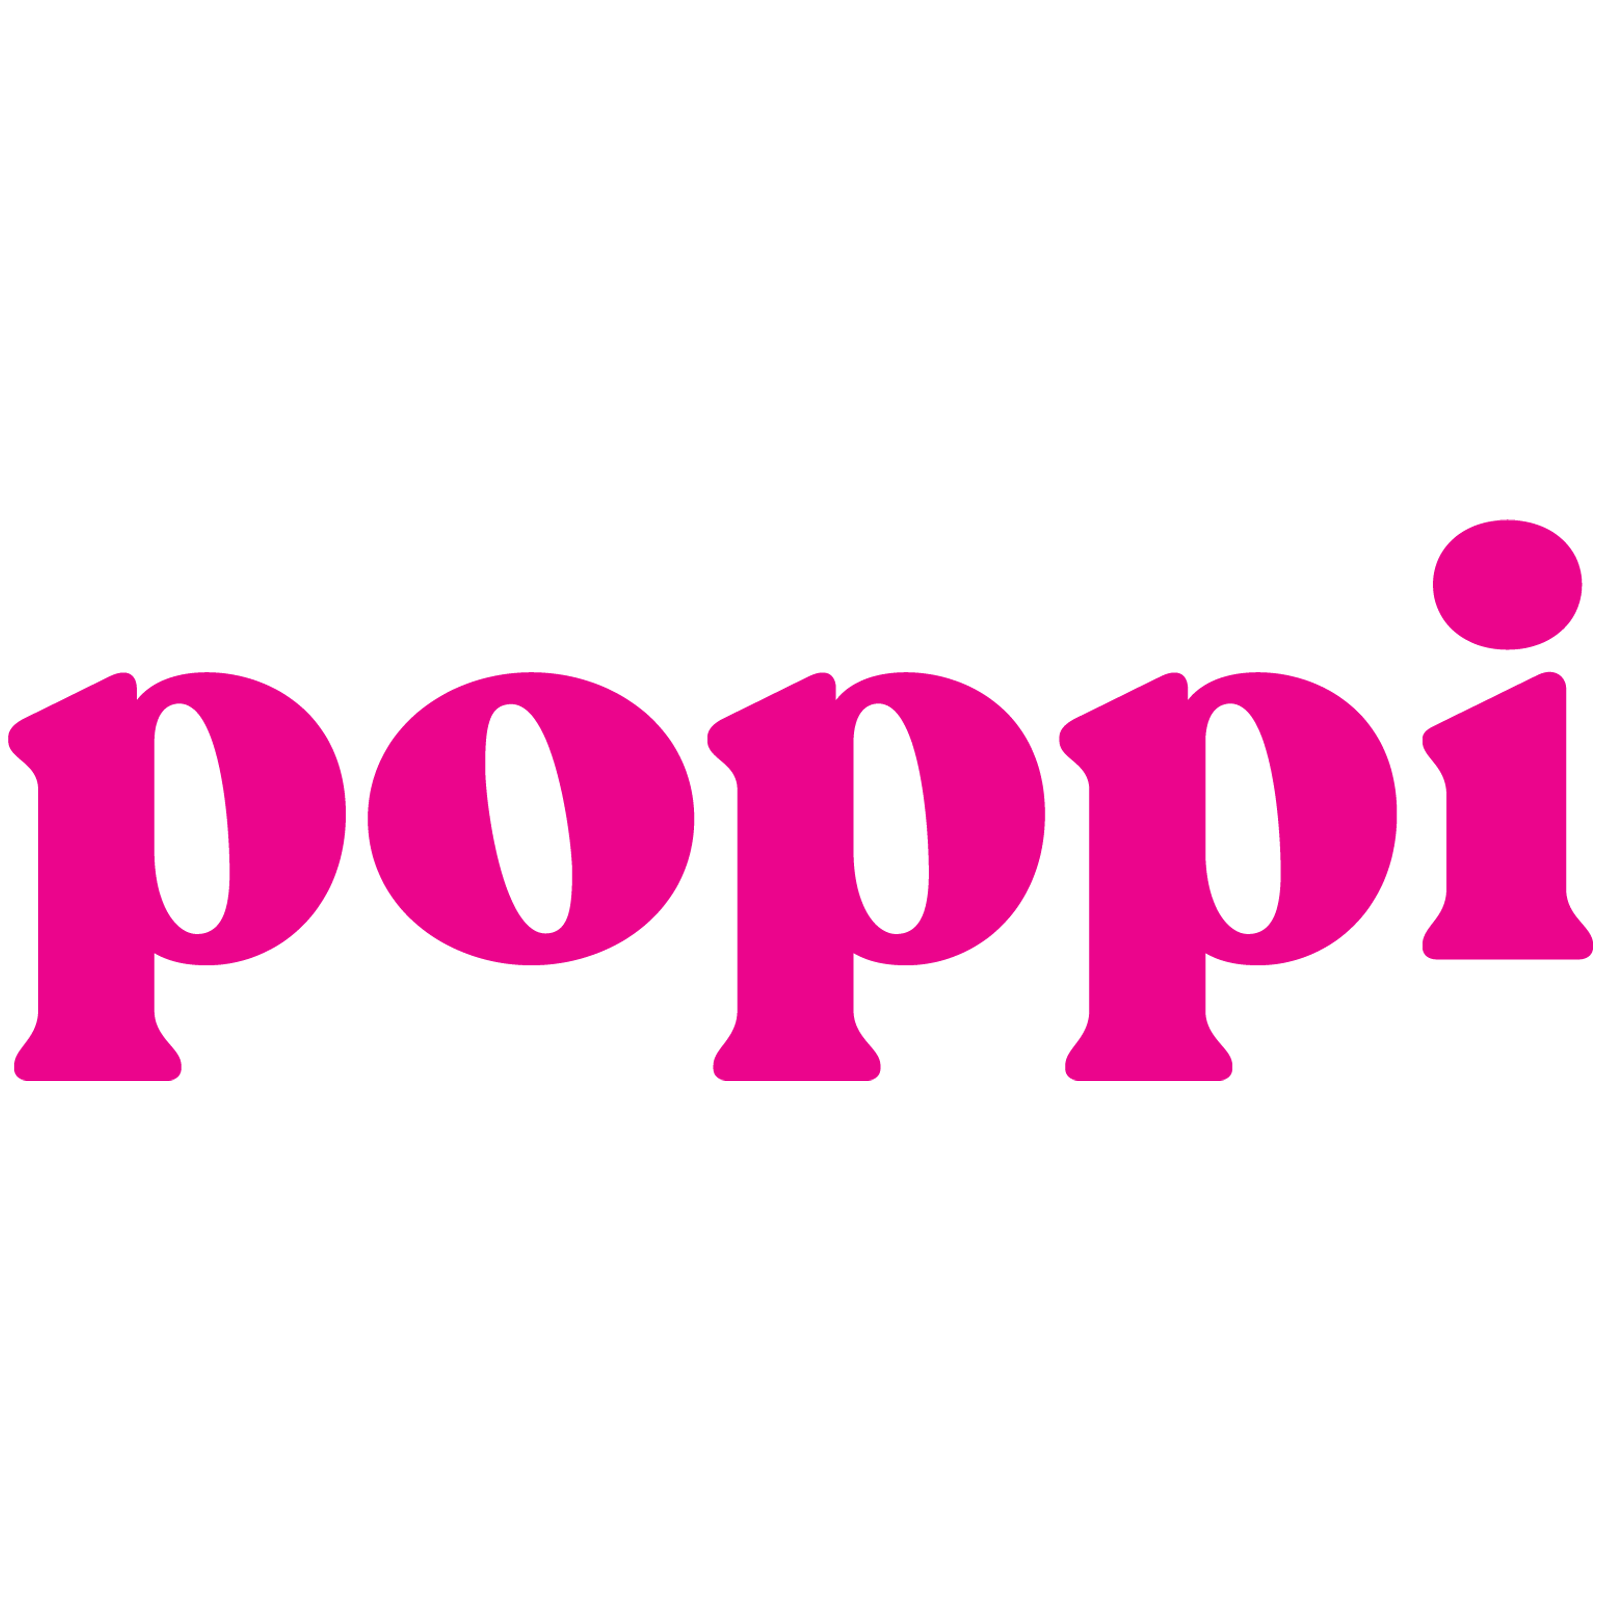 POPPI_LOGO_pink_square-01.png